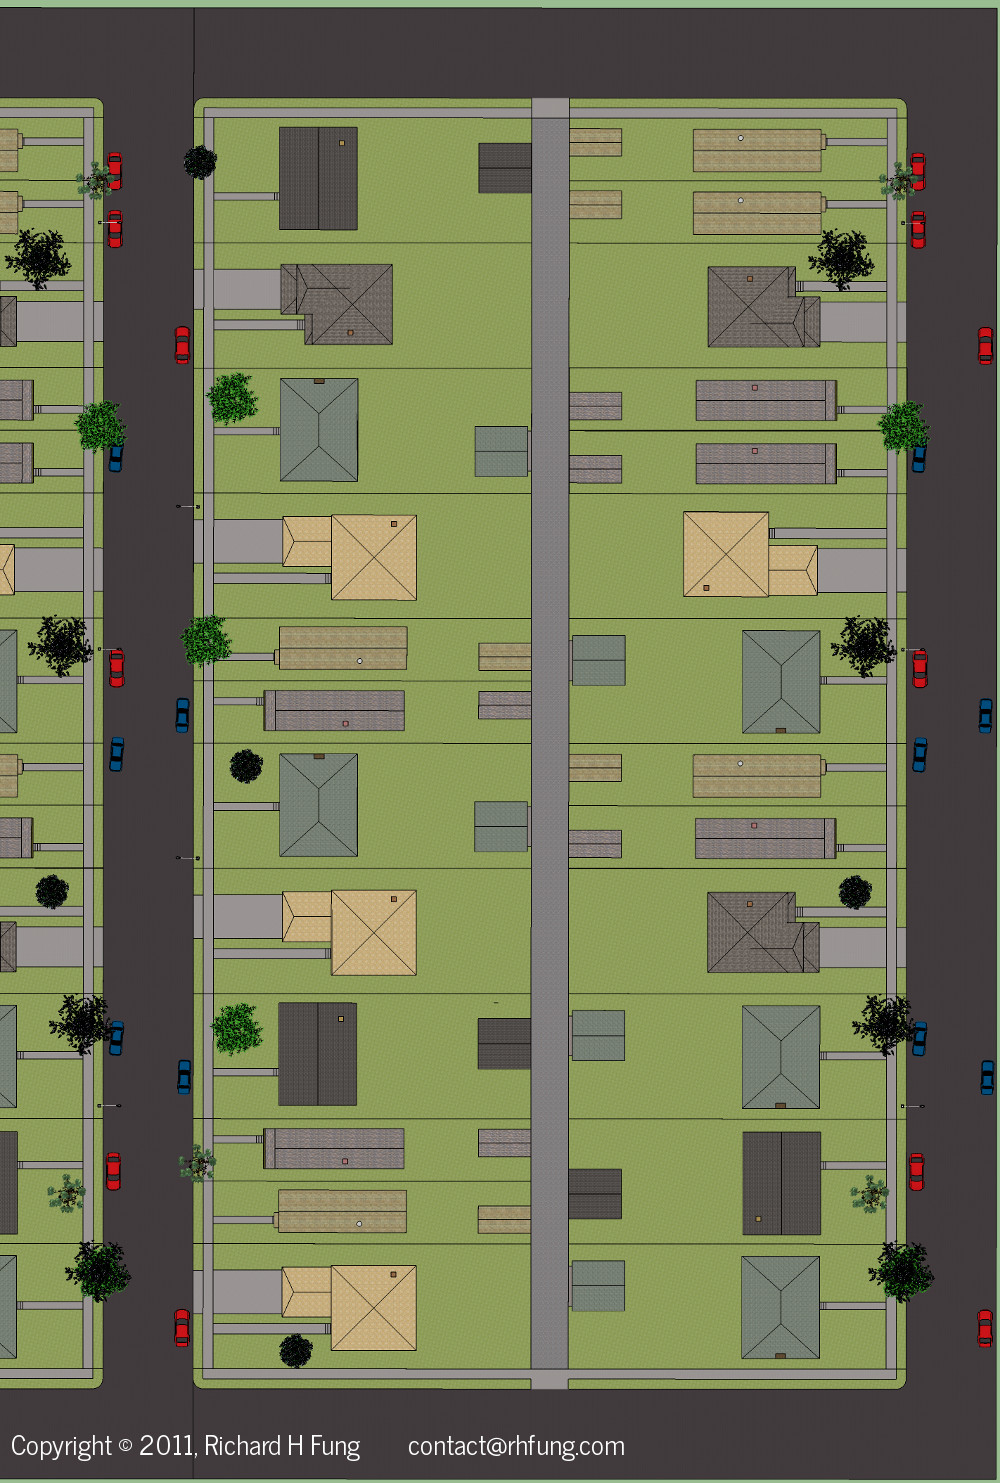 Urban massing model of a city block, plan view